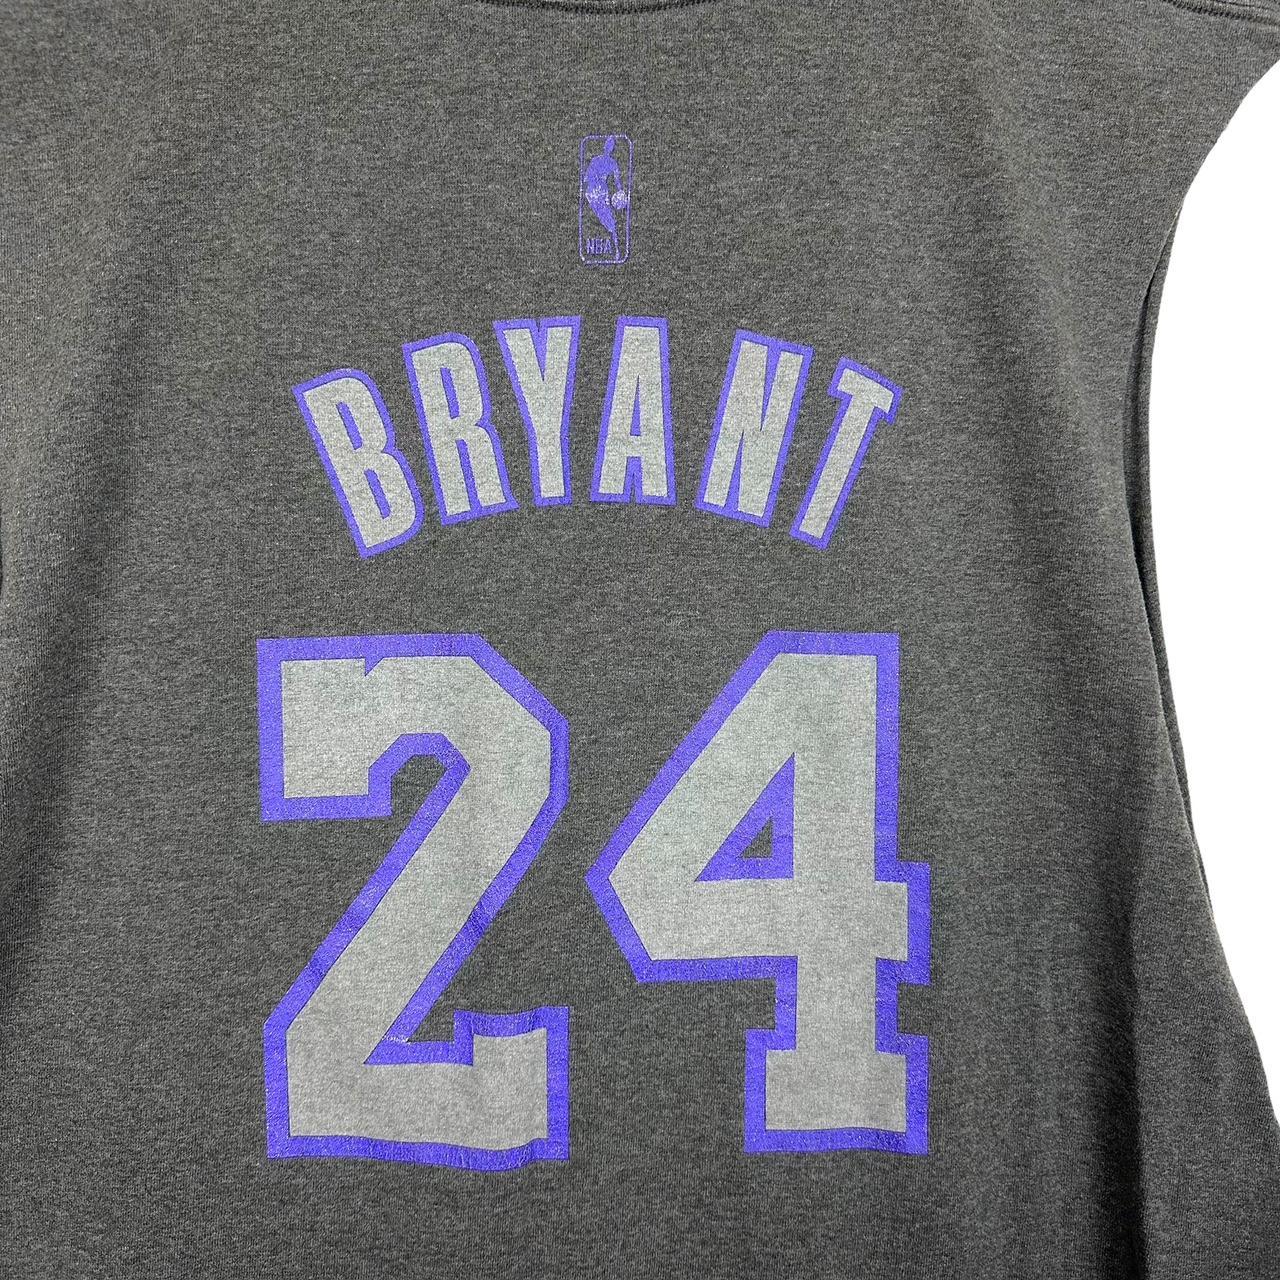 LA Lakers No 24 Kobe Bryant purple Adidas NBA - Depop